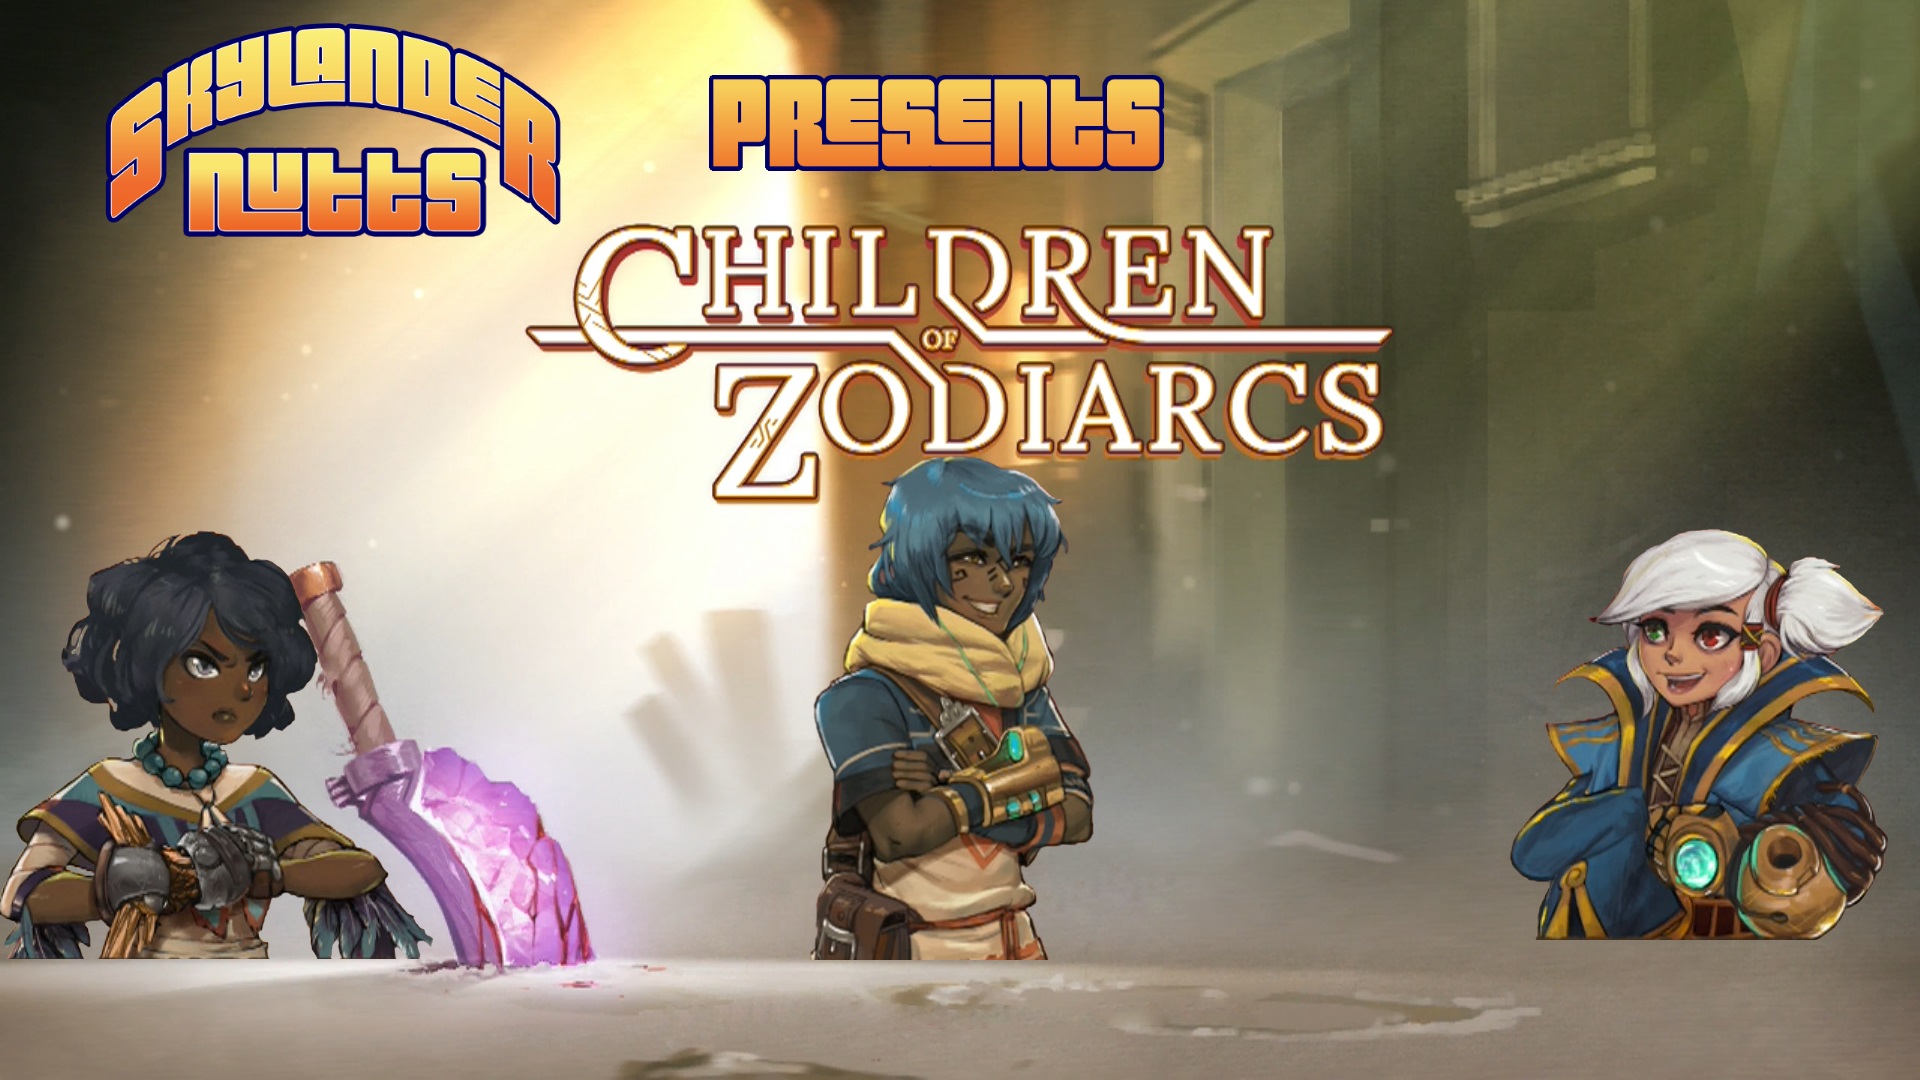 SkylanderNutts Presents Children of Zodiarcs